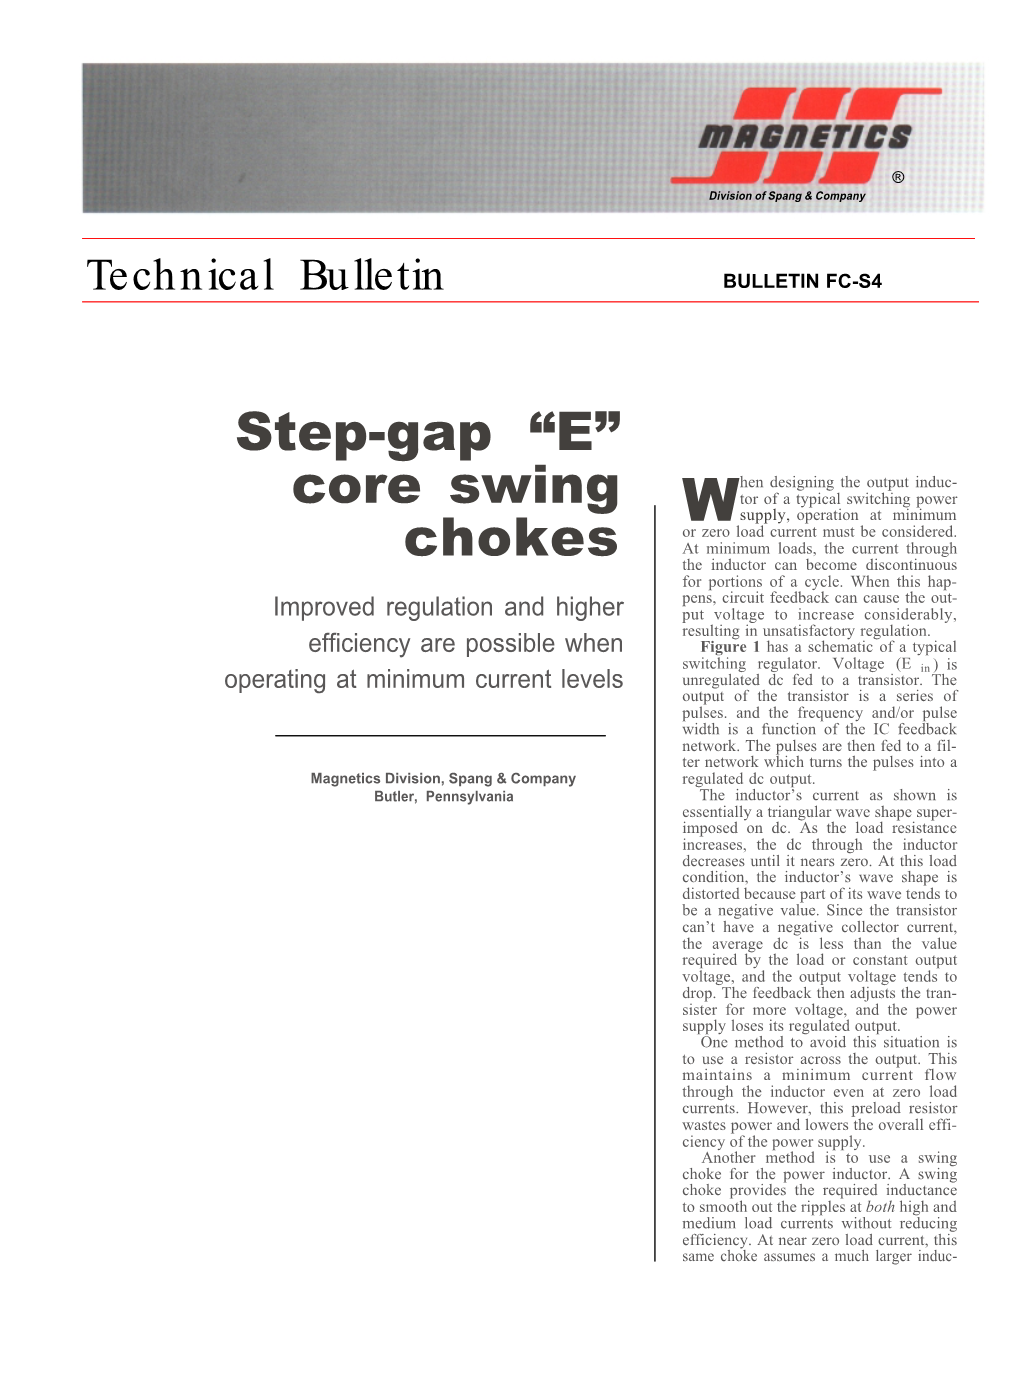 Step-Gap “E” Core Swing Chokes